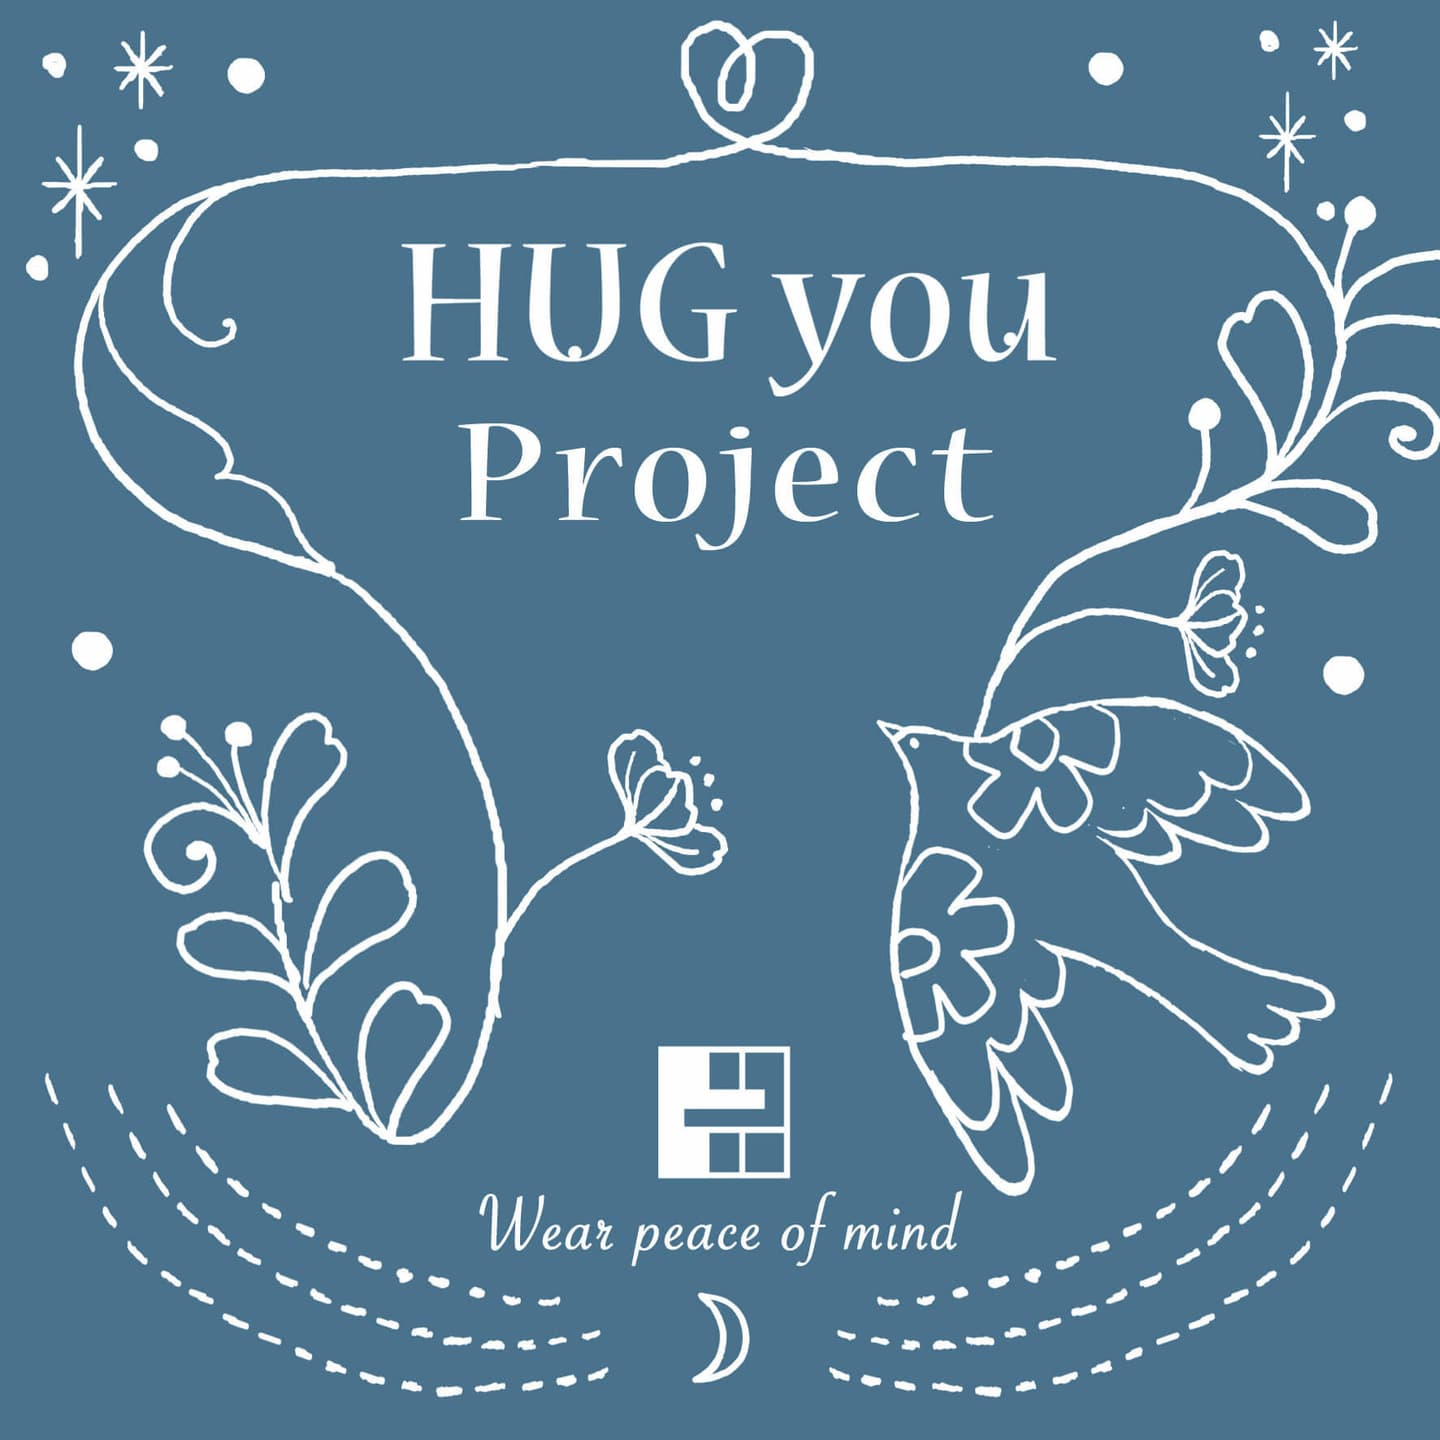 HUG you project